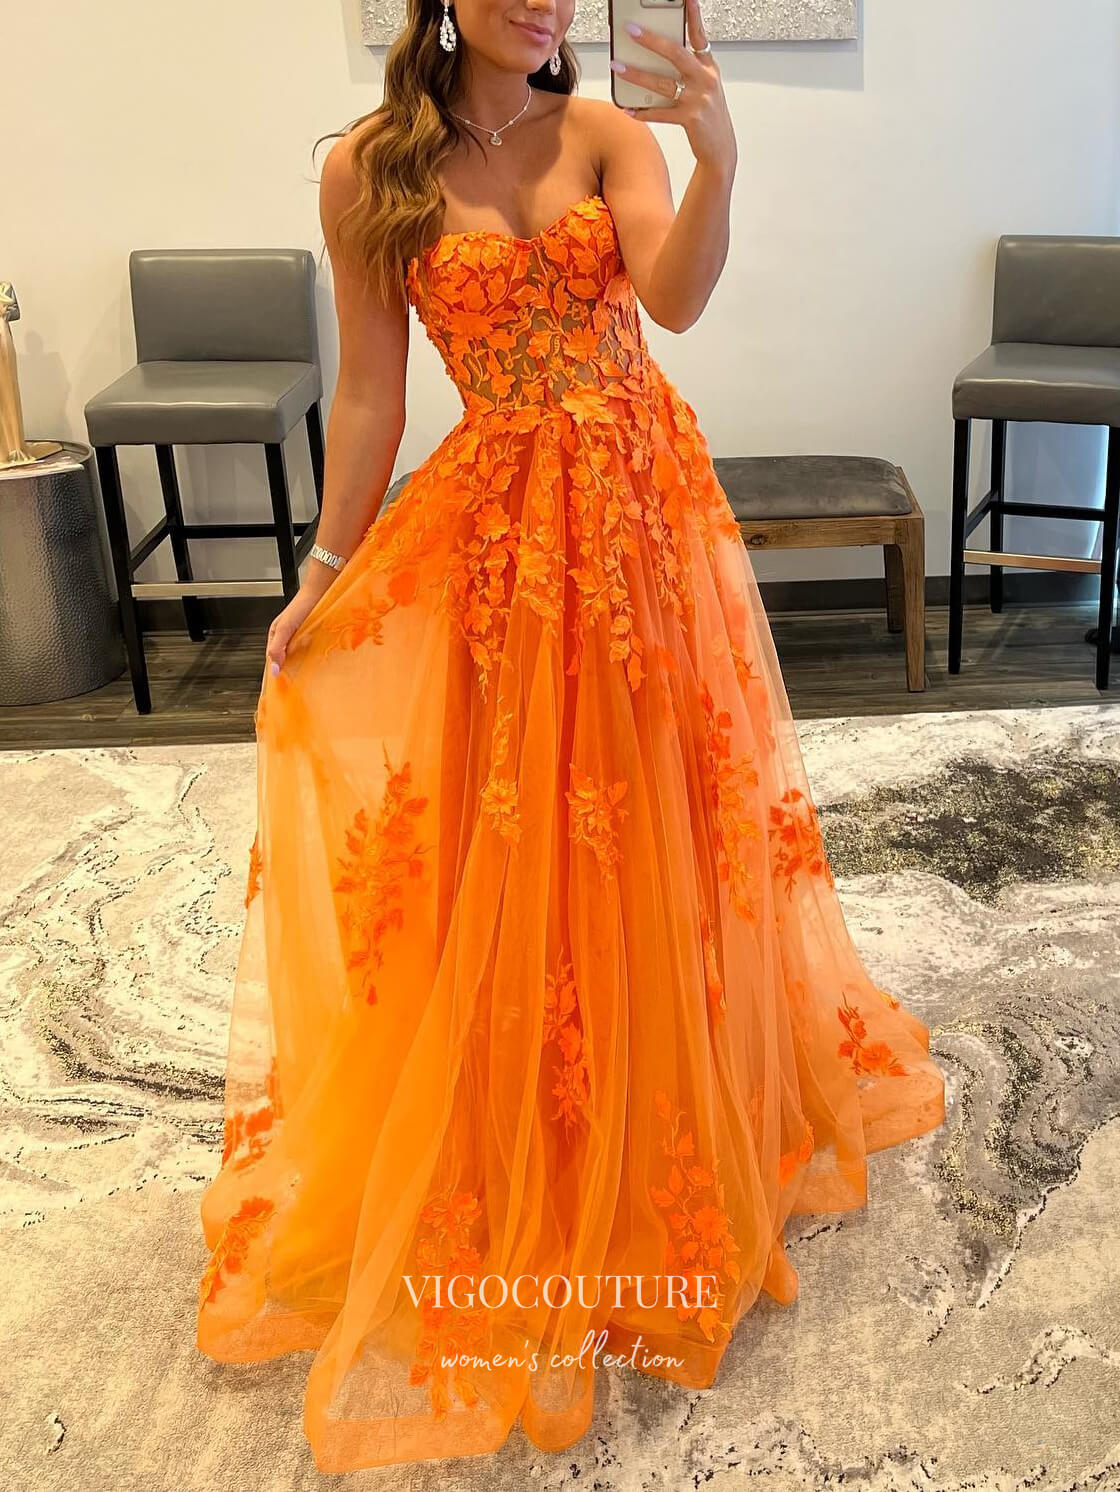 vigocouture-Orange Lace Applique Prom Dresses A-Line Strapless Formal Dresses 21568-Prom Dresses-vigocouture-Orange-US2-